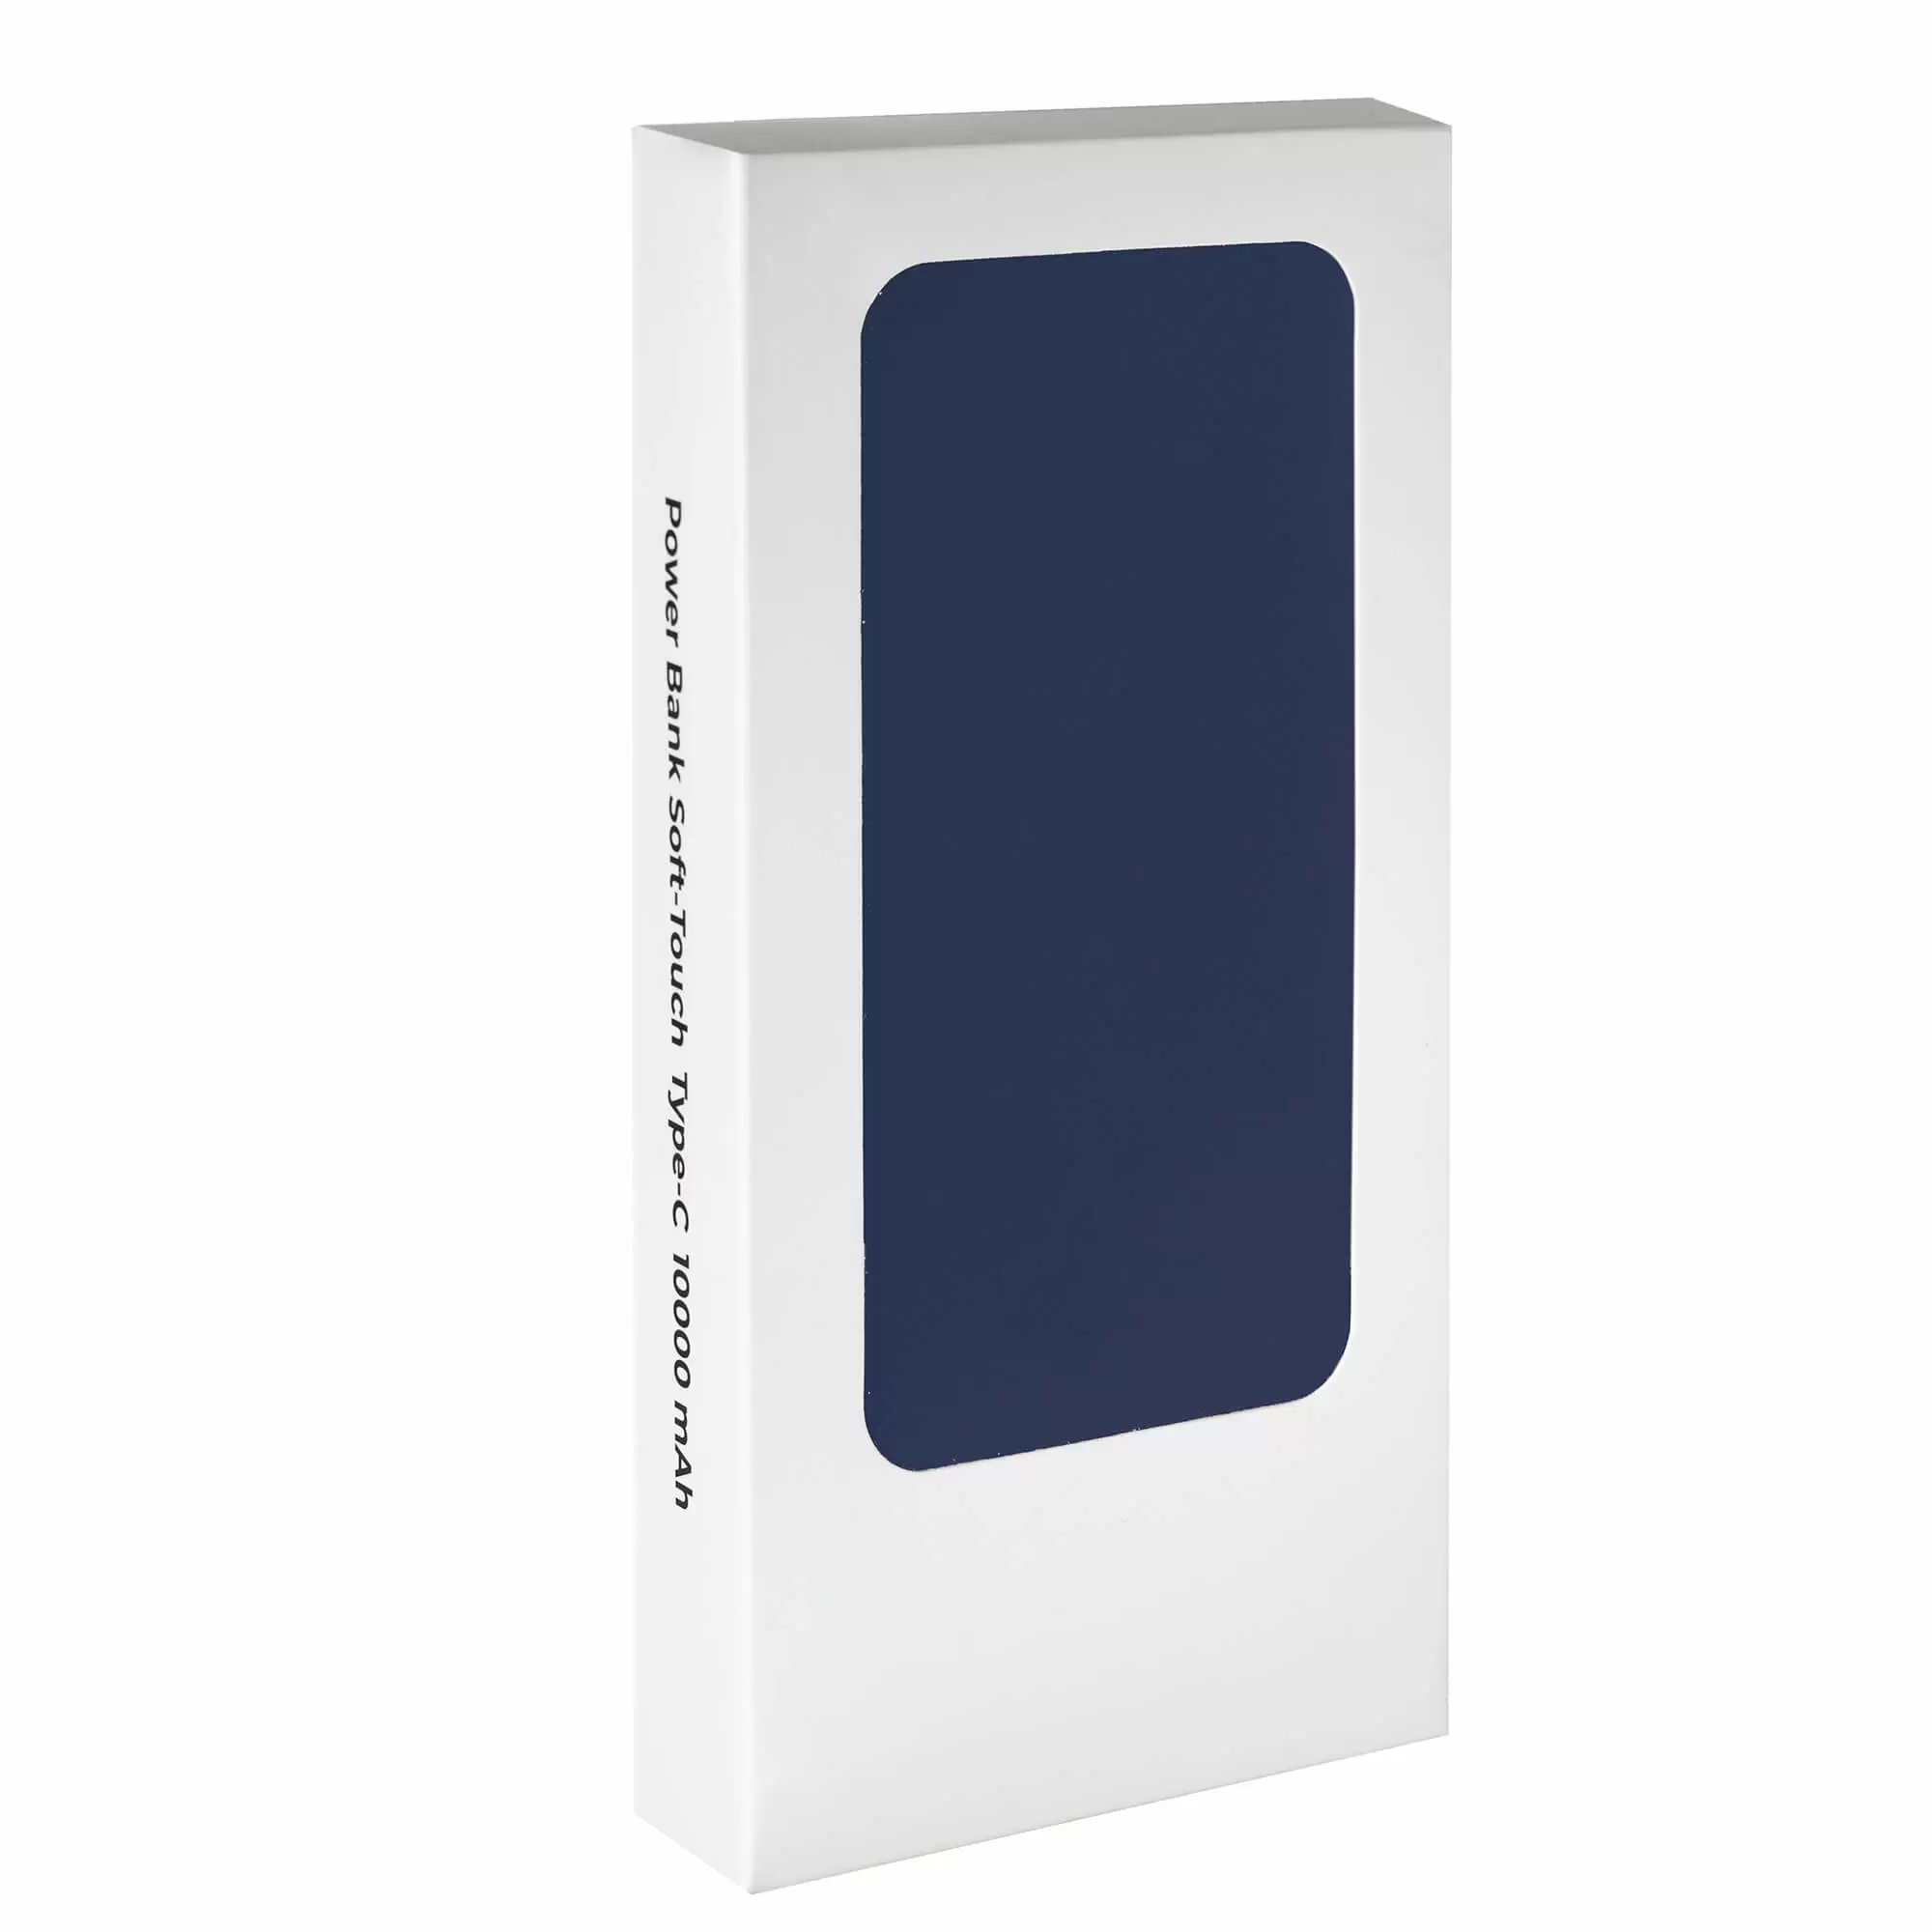 Внешний аккумулятор с подсветкой логотипа SUNNY SOFT, 10000 мА·ч Синий 5035.01